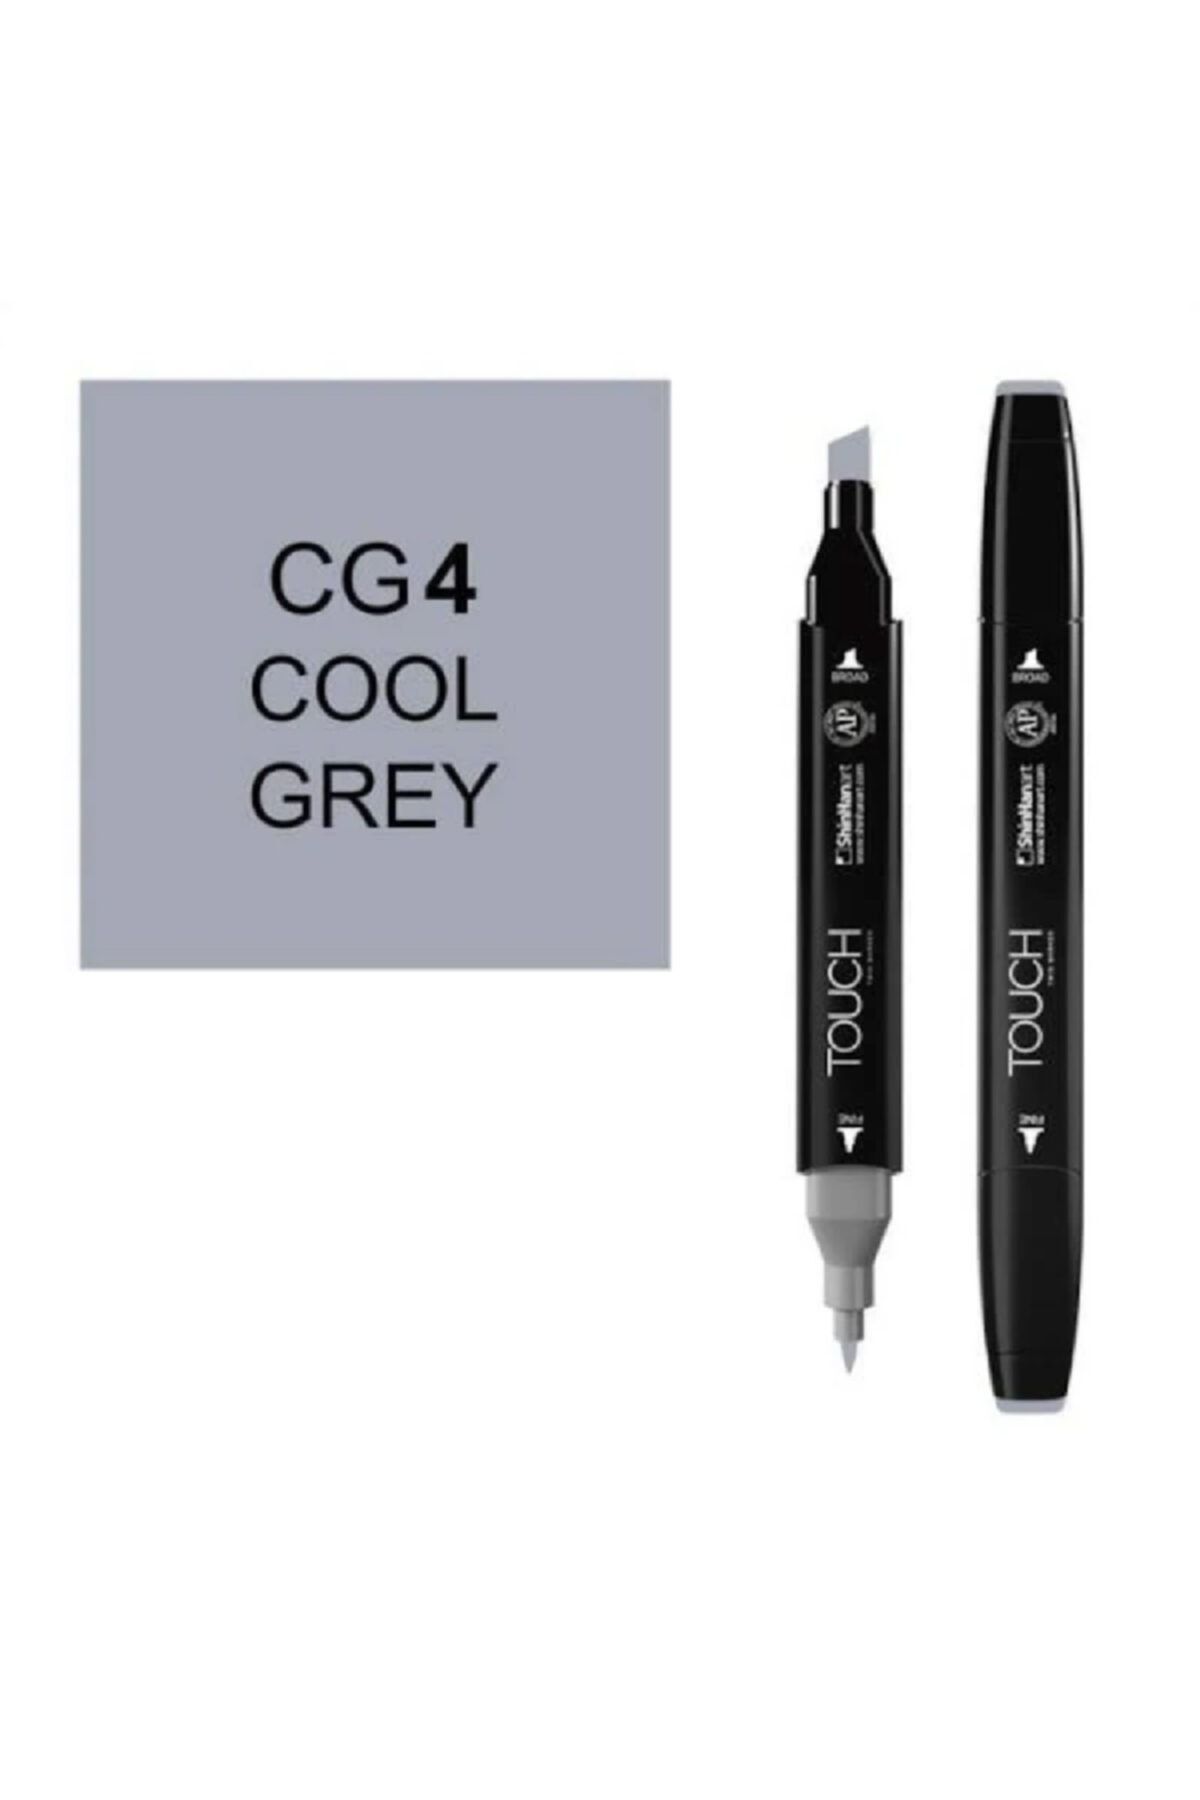 Ponart Touch Twin Cg4 Cool Grey Marker Sh1112040